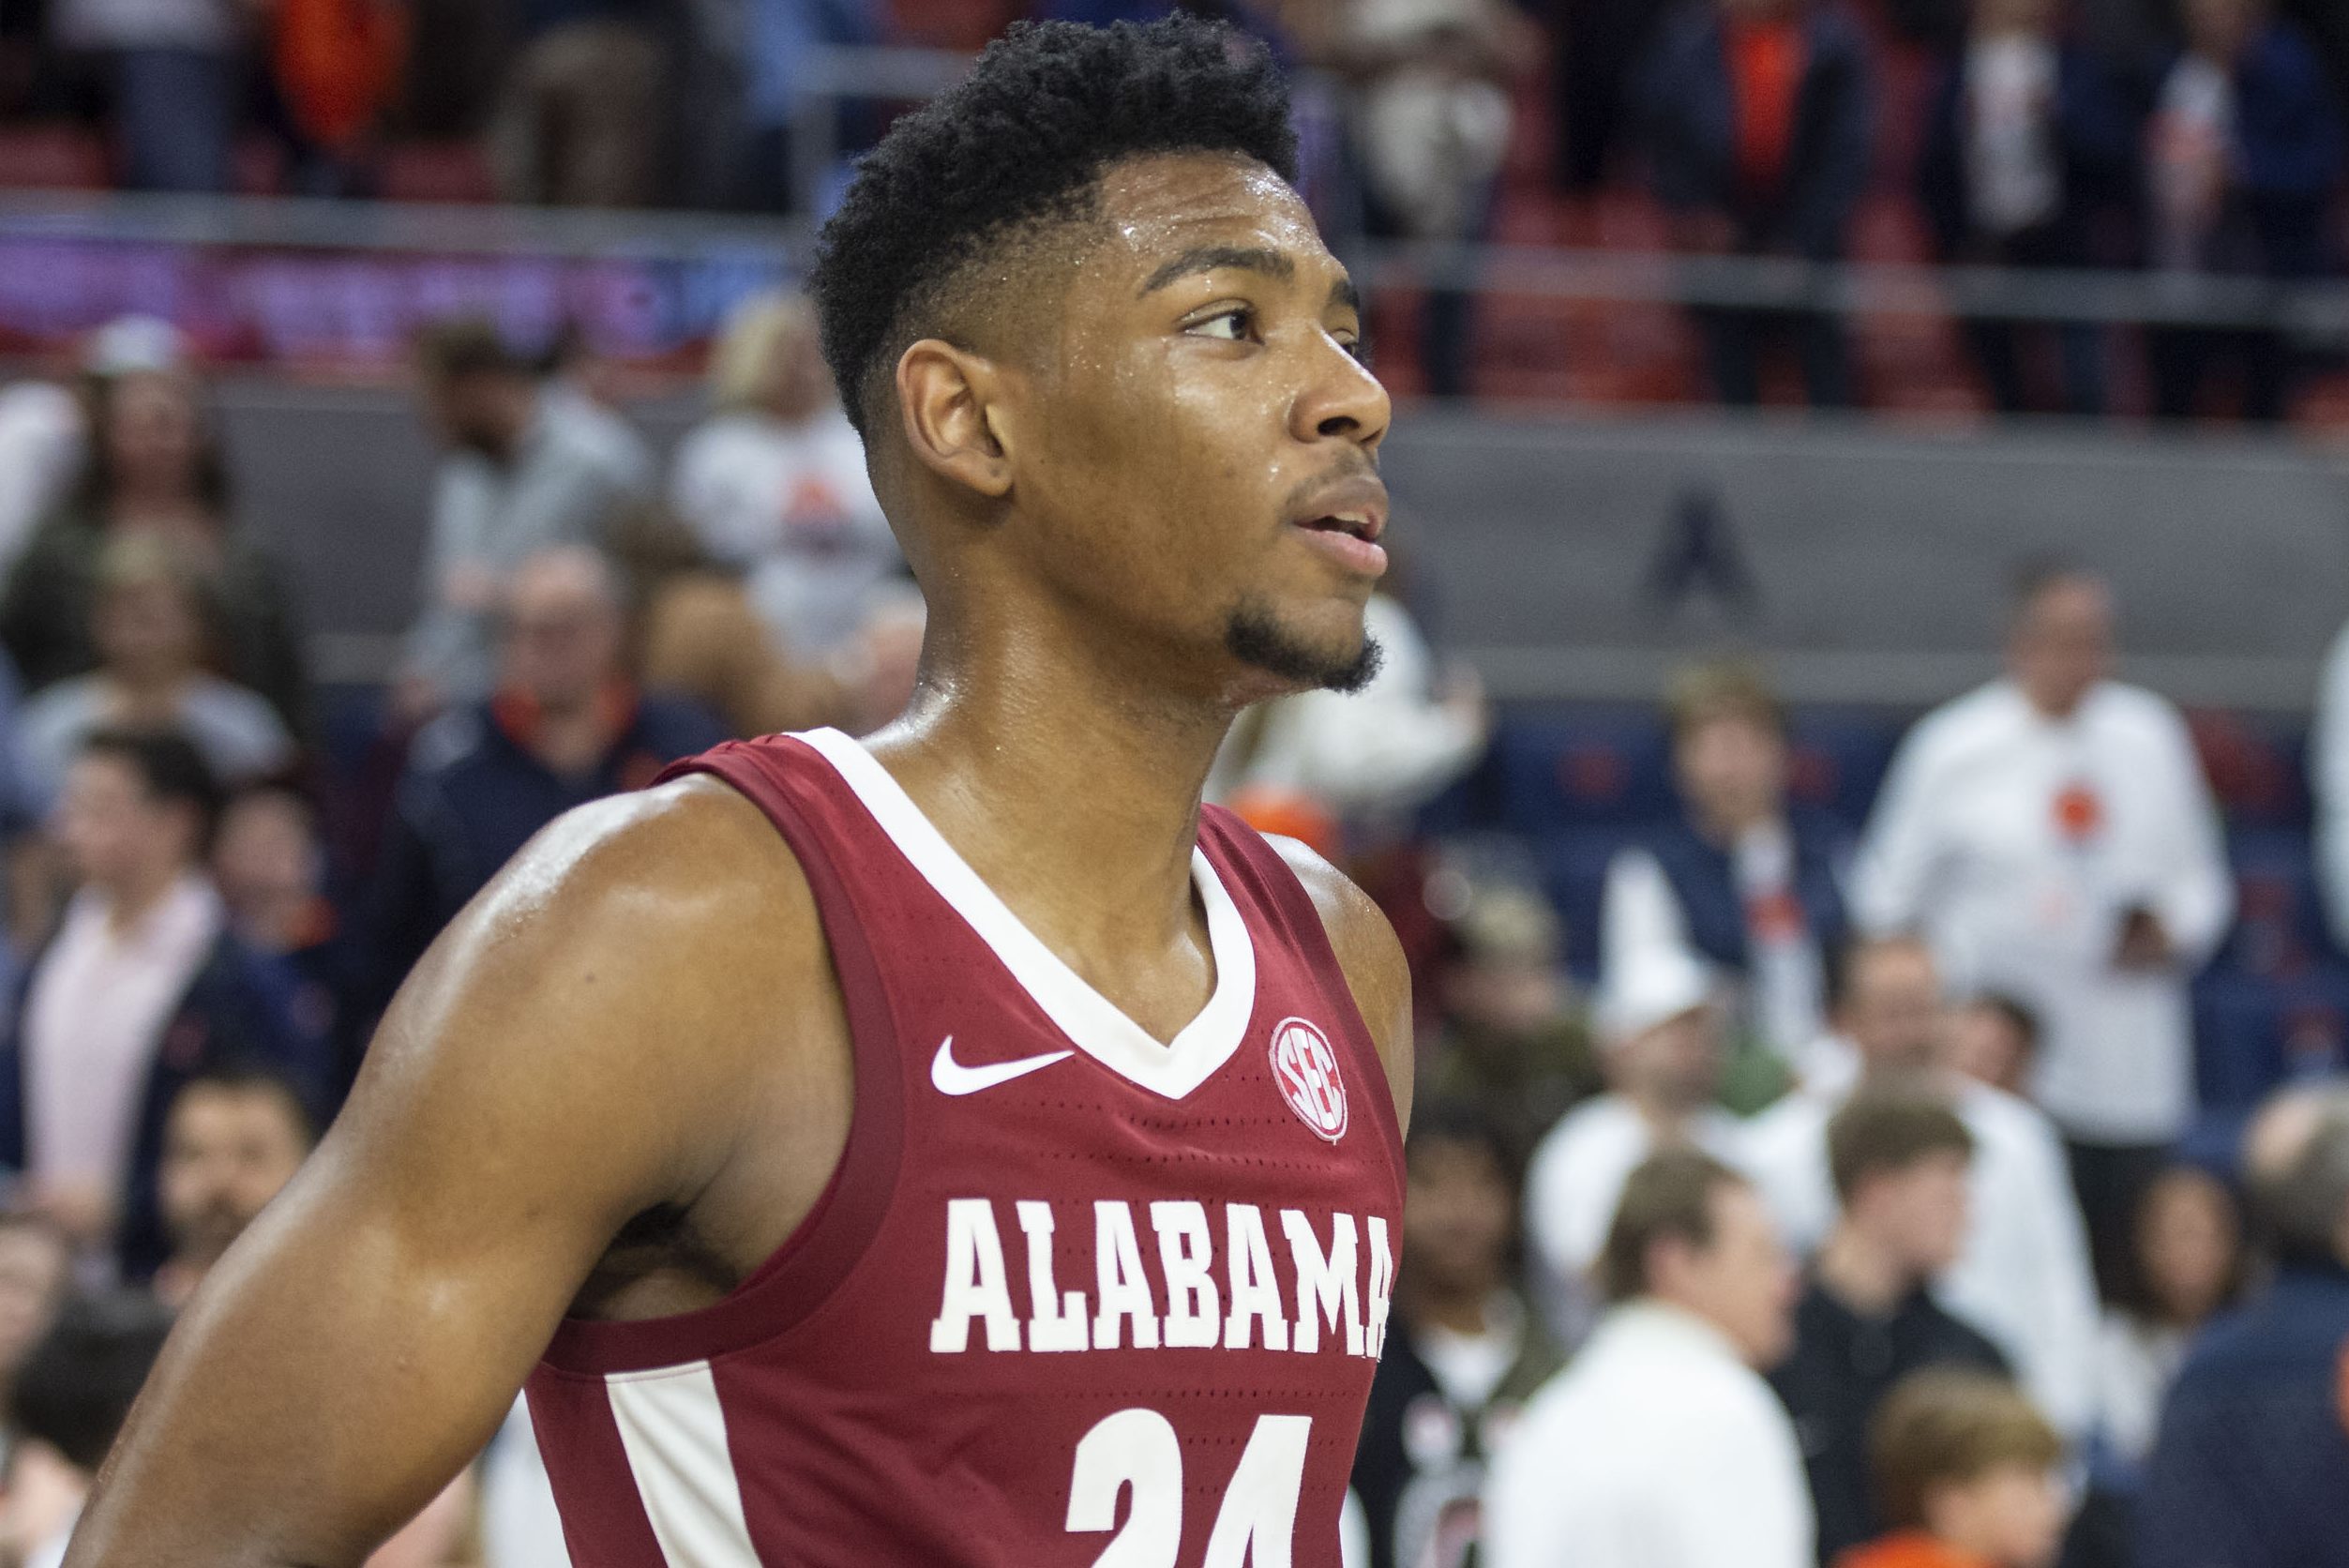 Is Alabama Going to Let Brandon Miller Keep Playing Basketball? - InsideHook